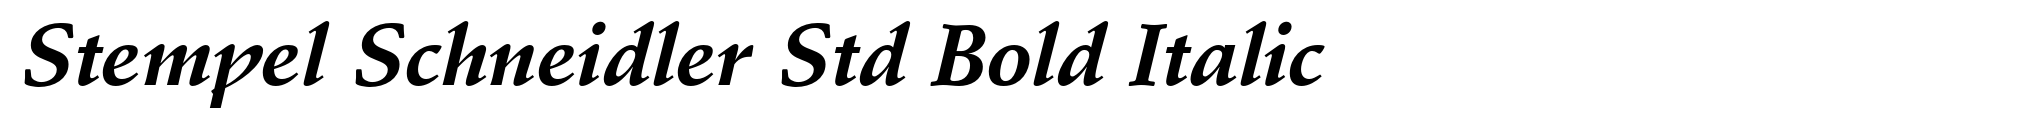 Stempel Schneidler Std Bold Italic image